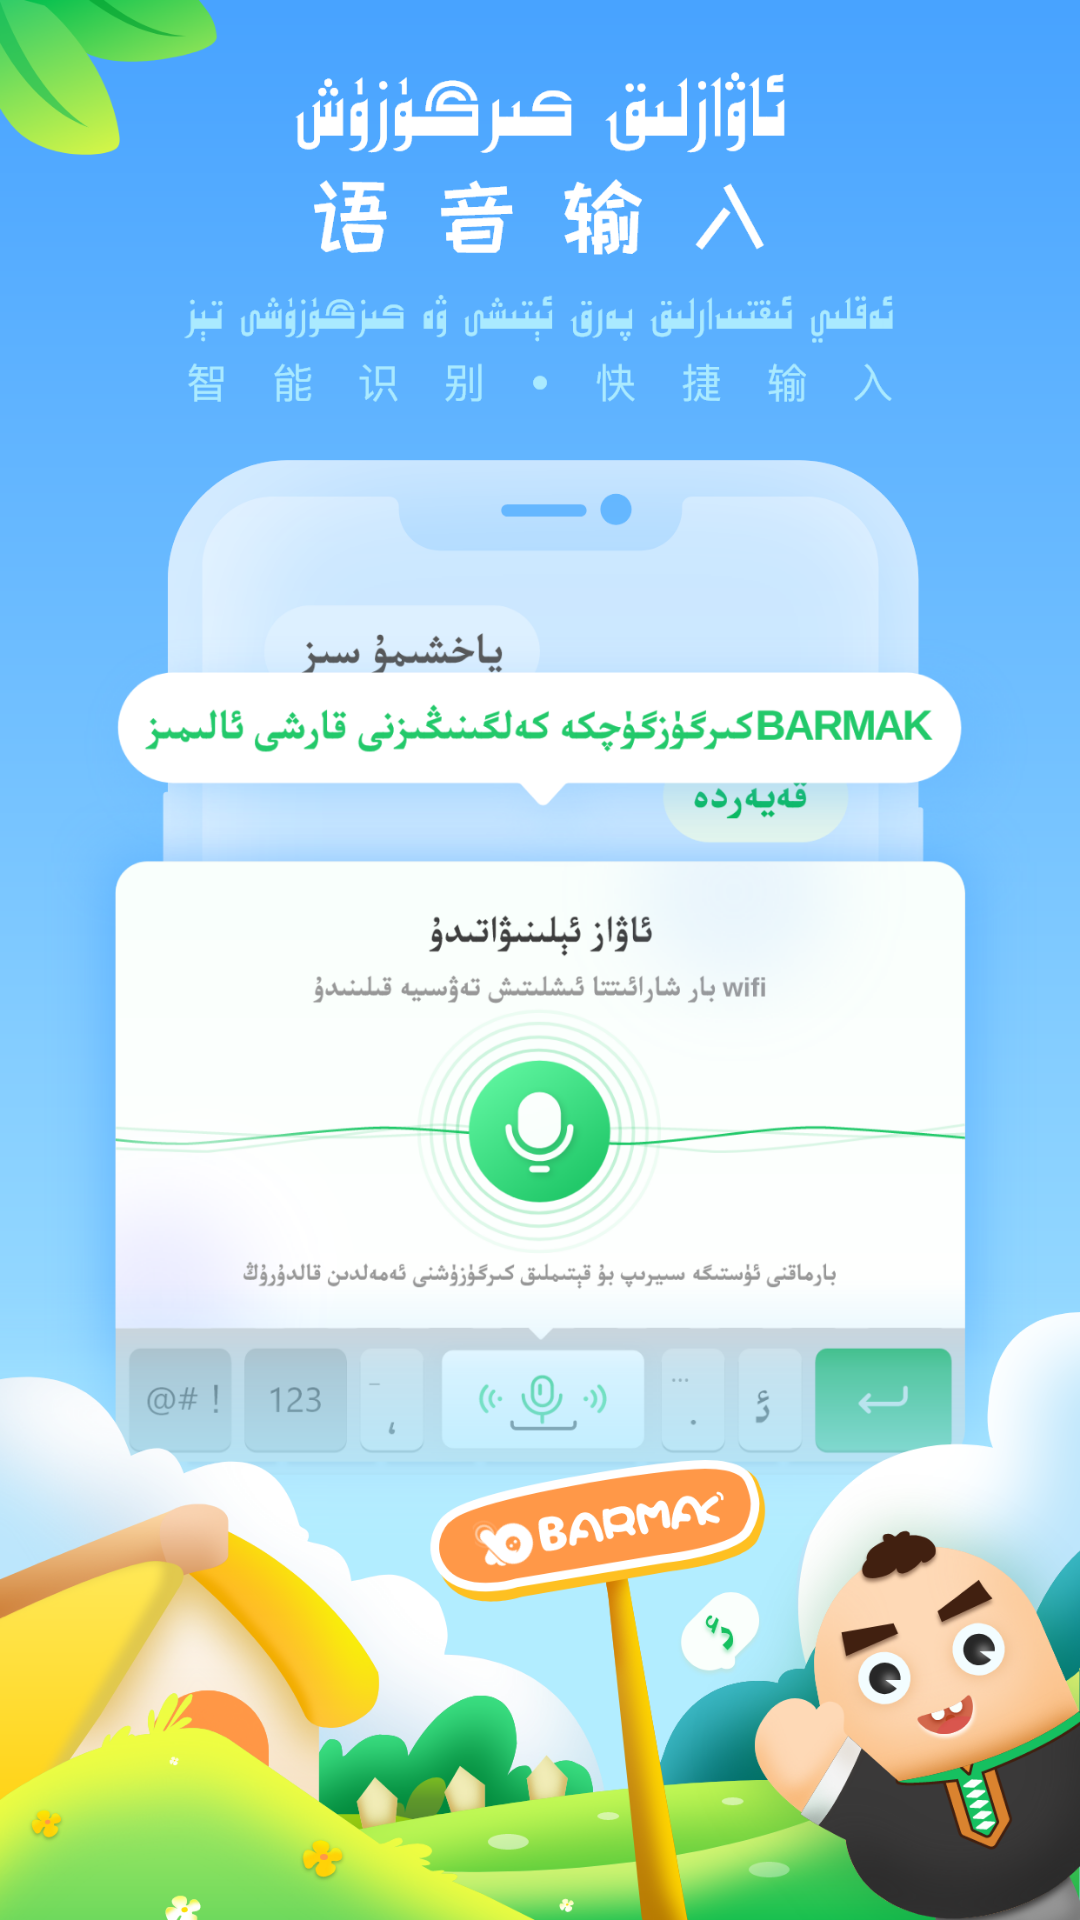 BARMAK输入法app